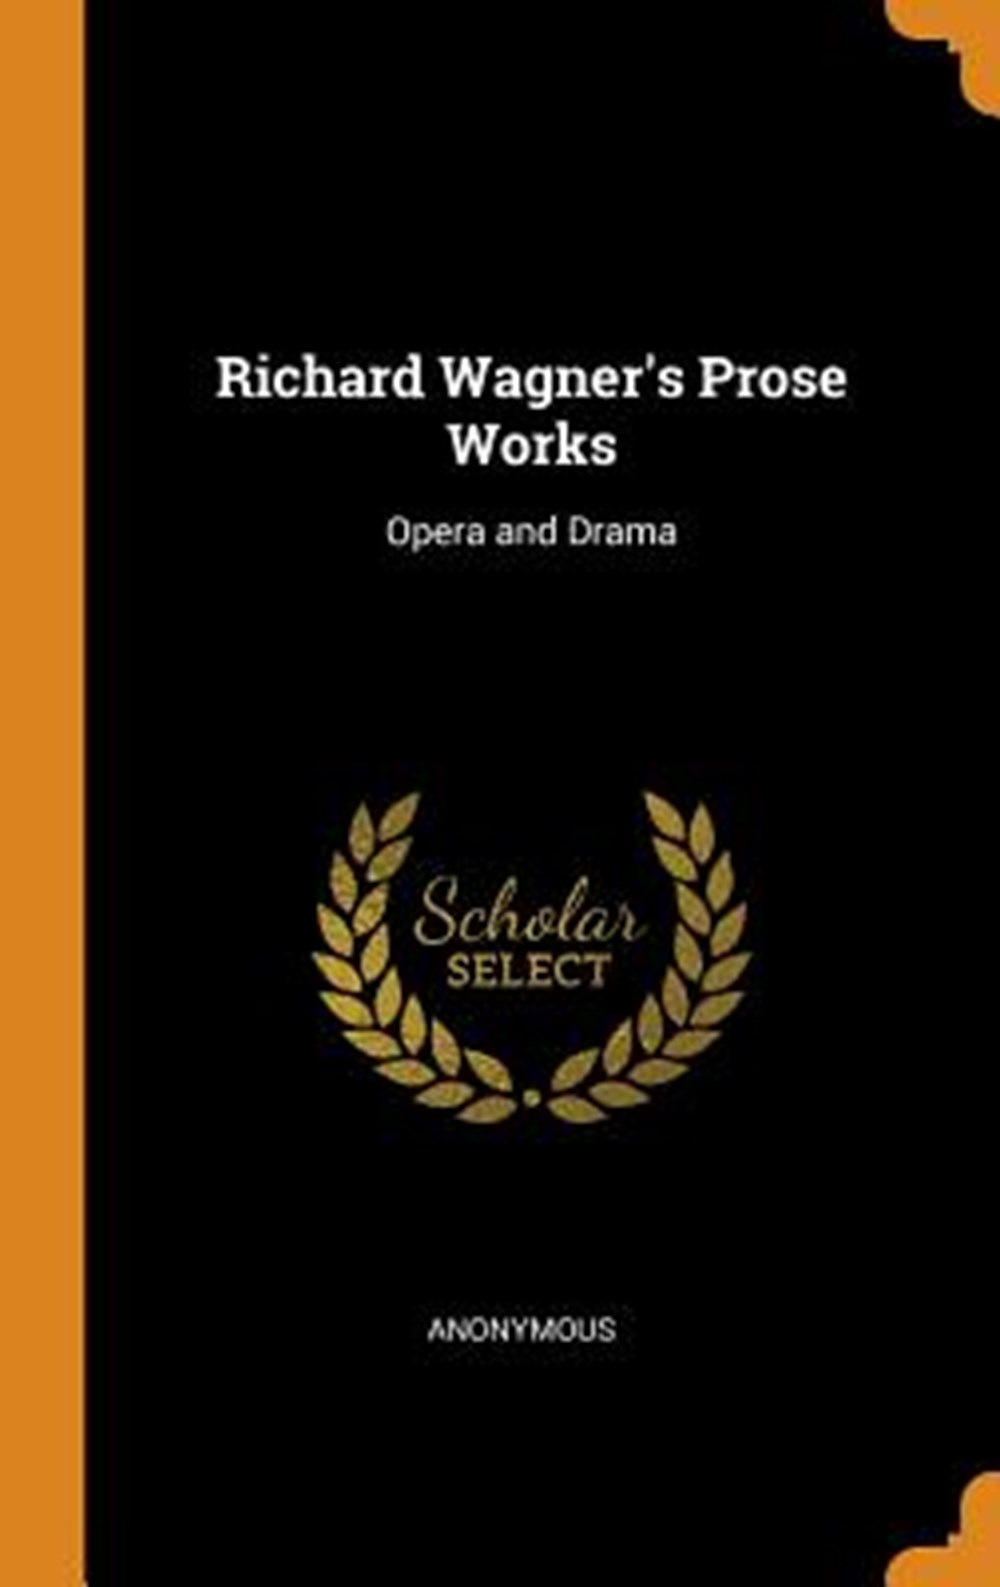 Richard Wagner's Prose Works Opera and Drama